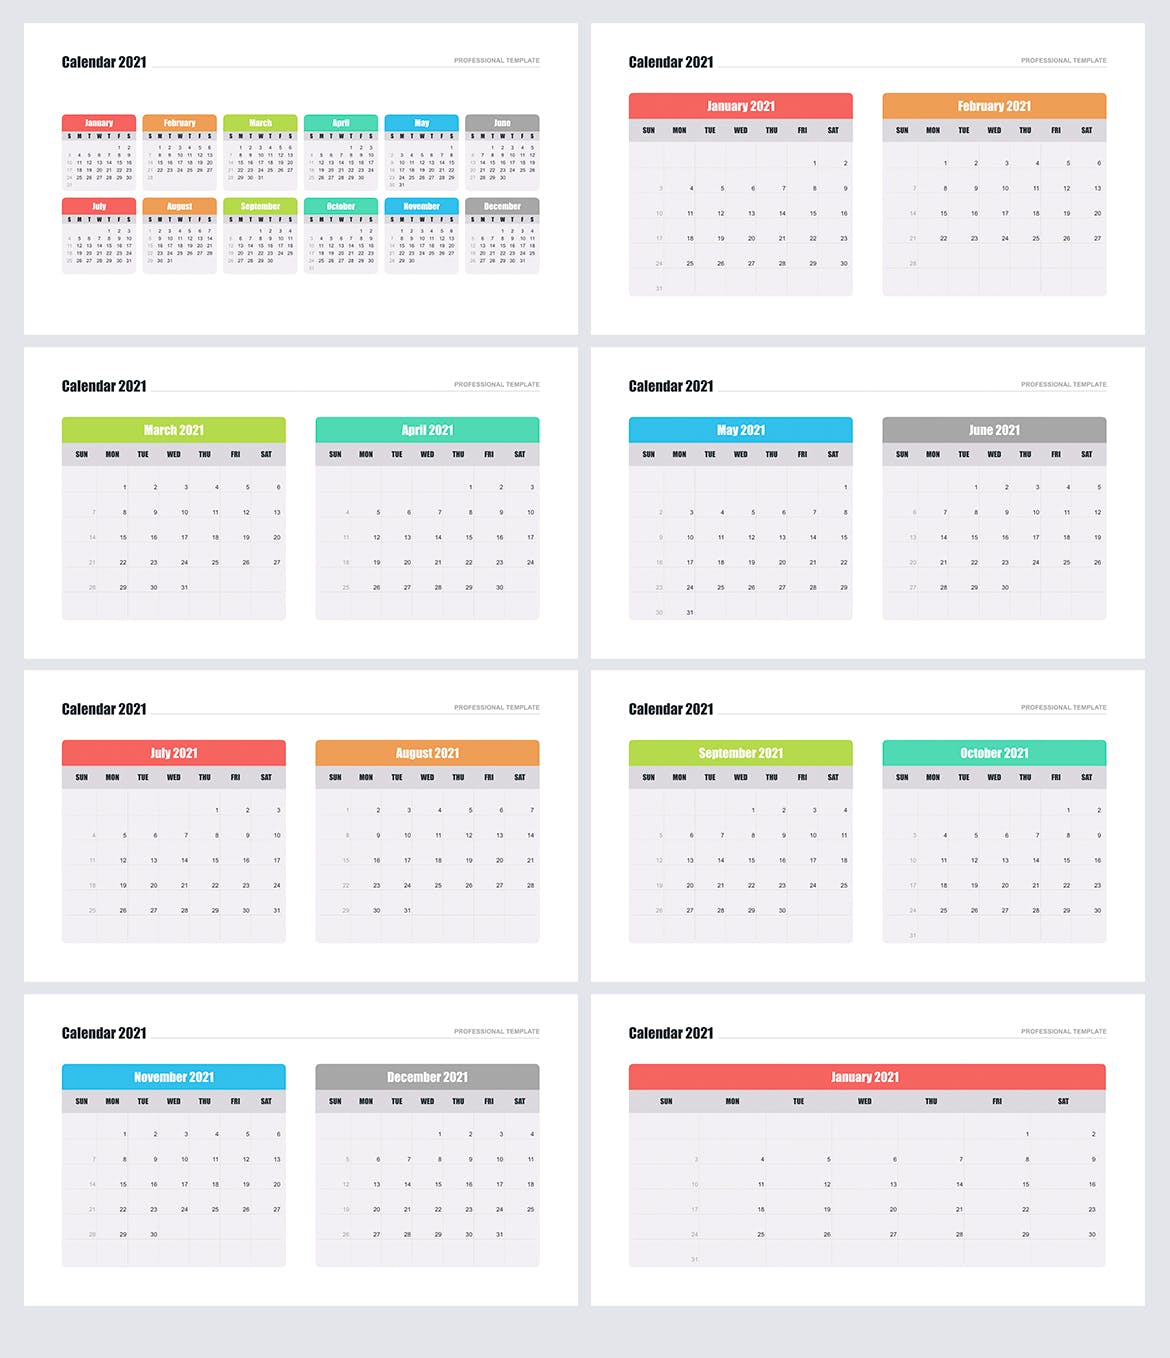 2021年年历设计Keynote幻灯片模板 Calendar 2021 for Keynote插图(1)